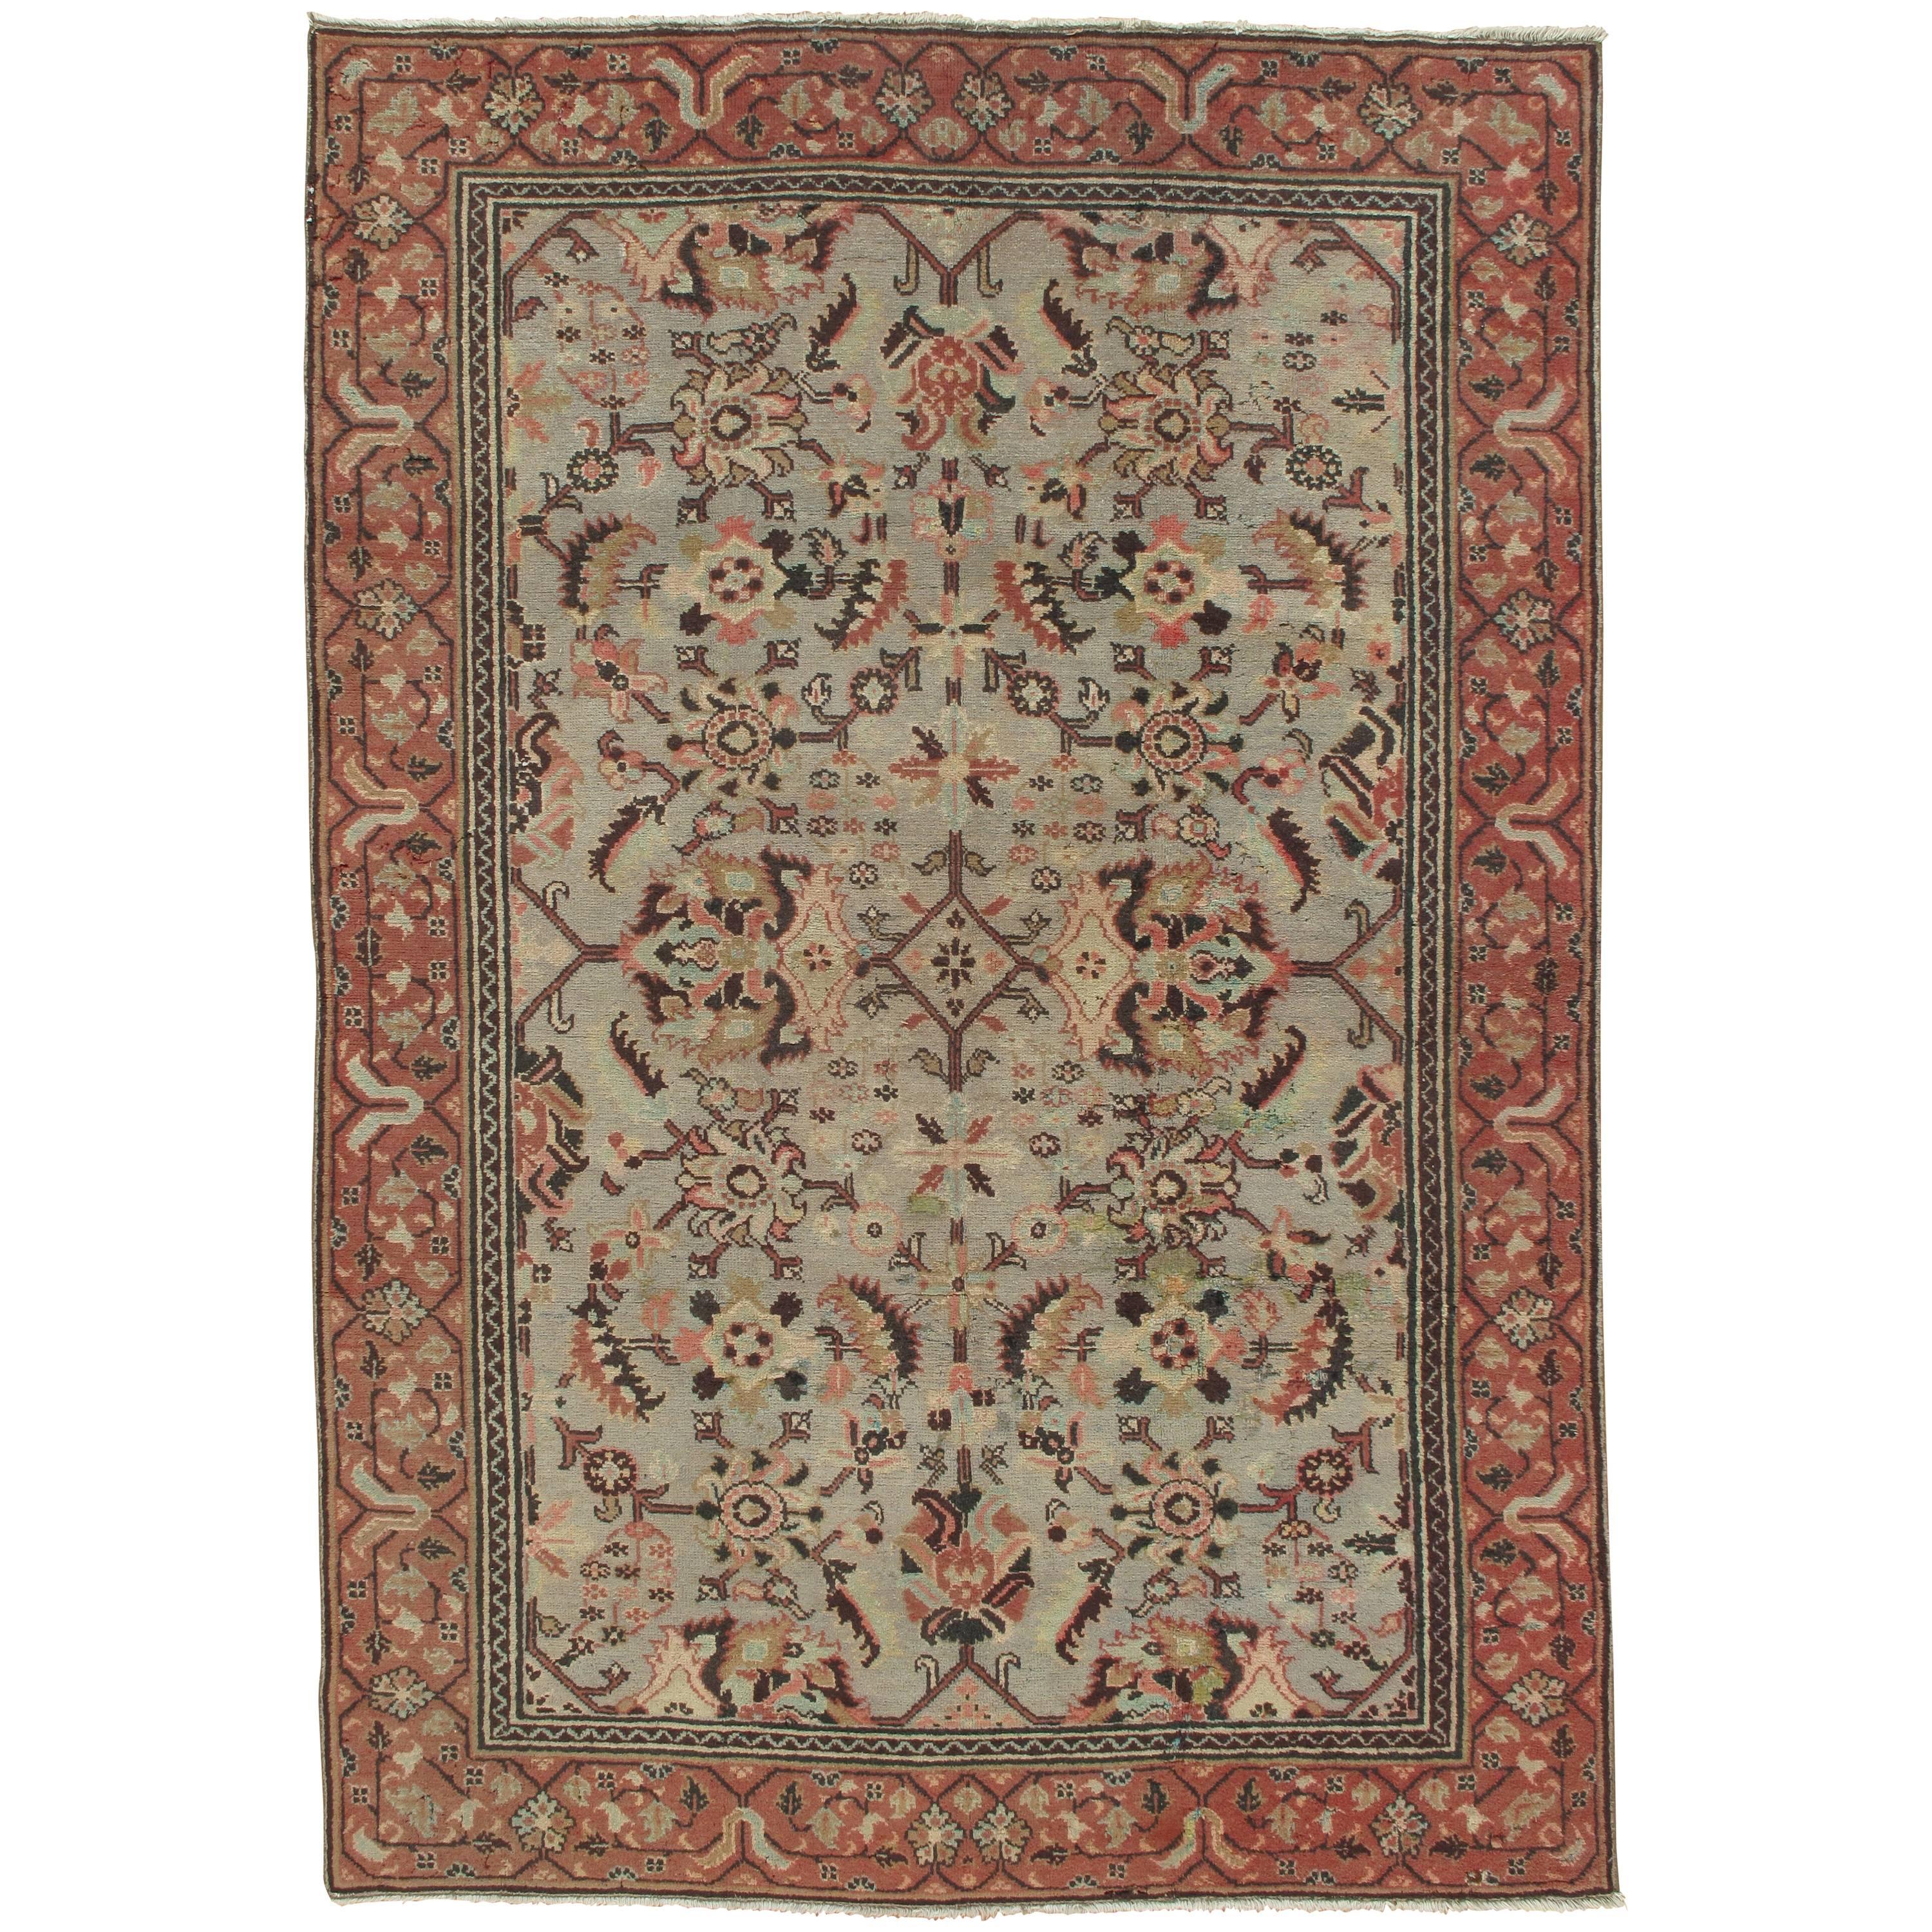 Antique Oushak Carpet, Handmade Oriental Rug, Pale blue, Coral Taupe, Cream Fine For Sale